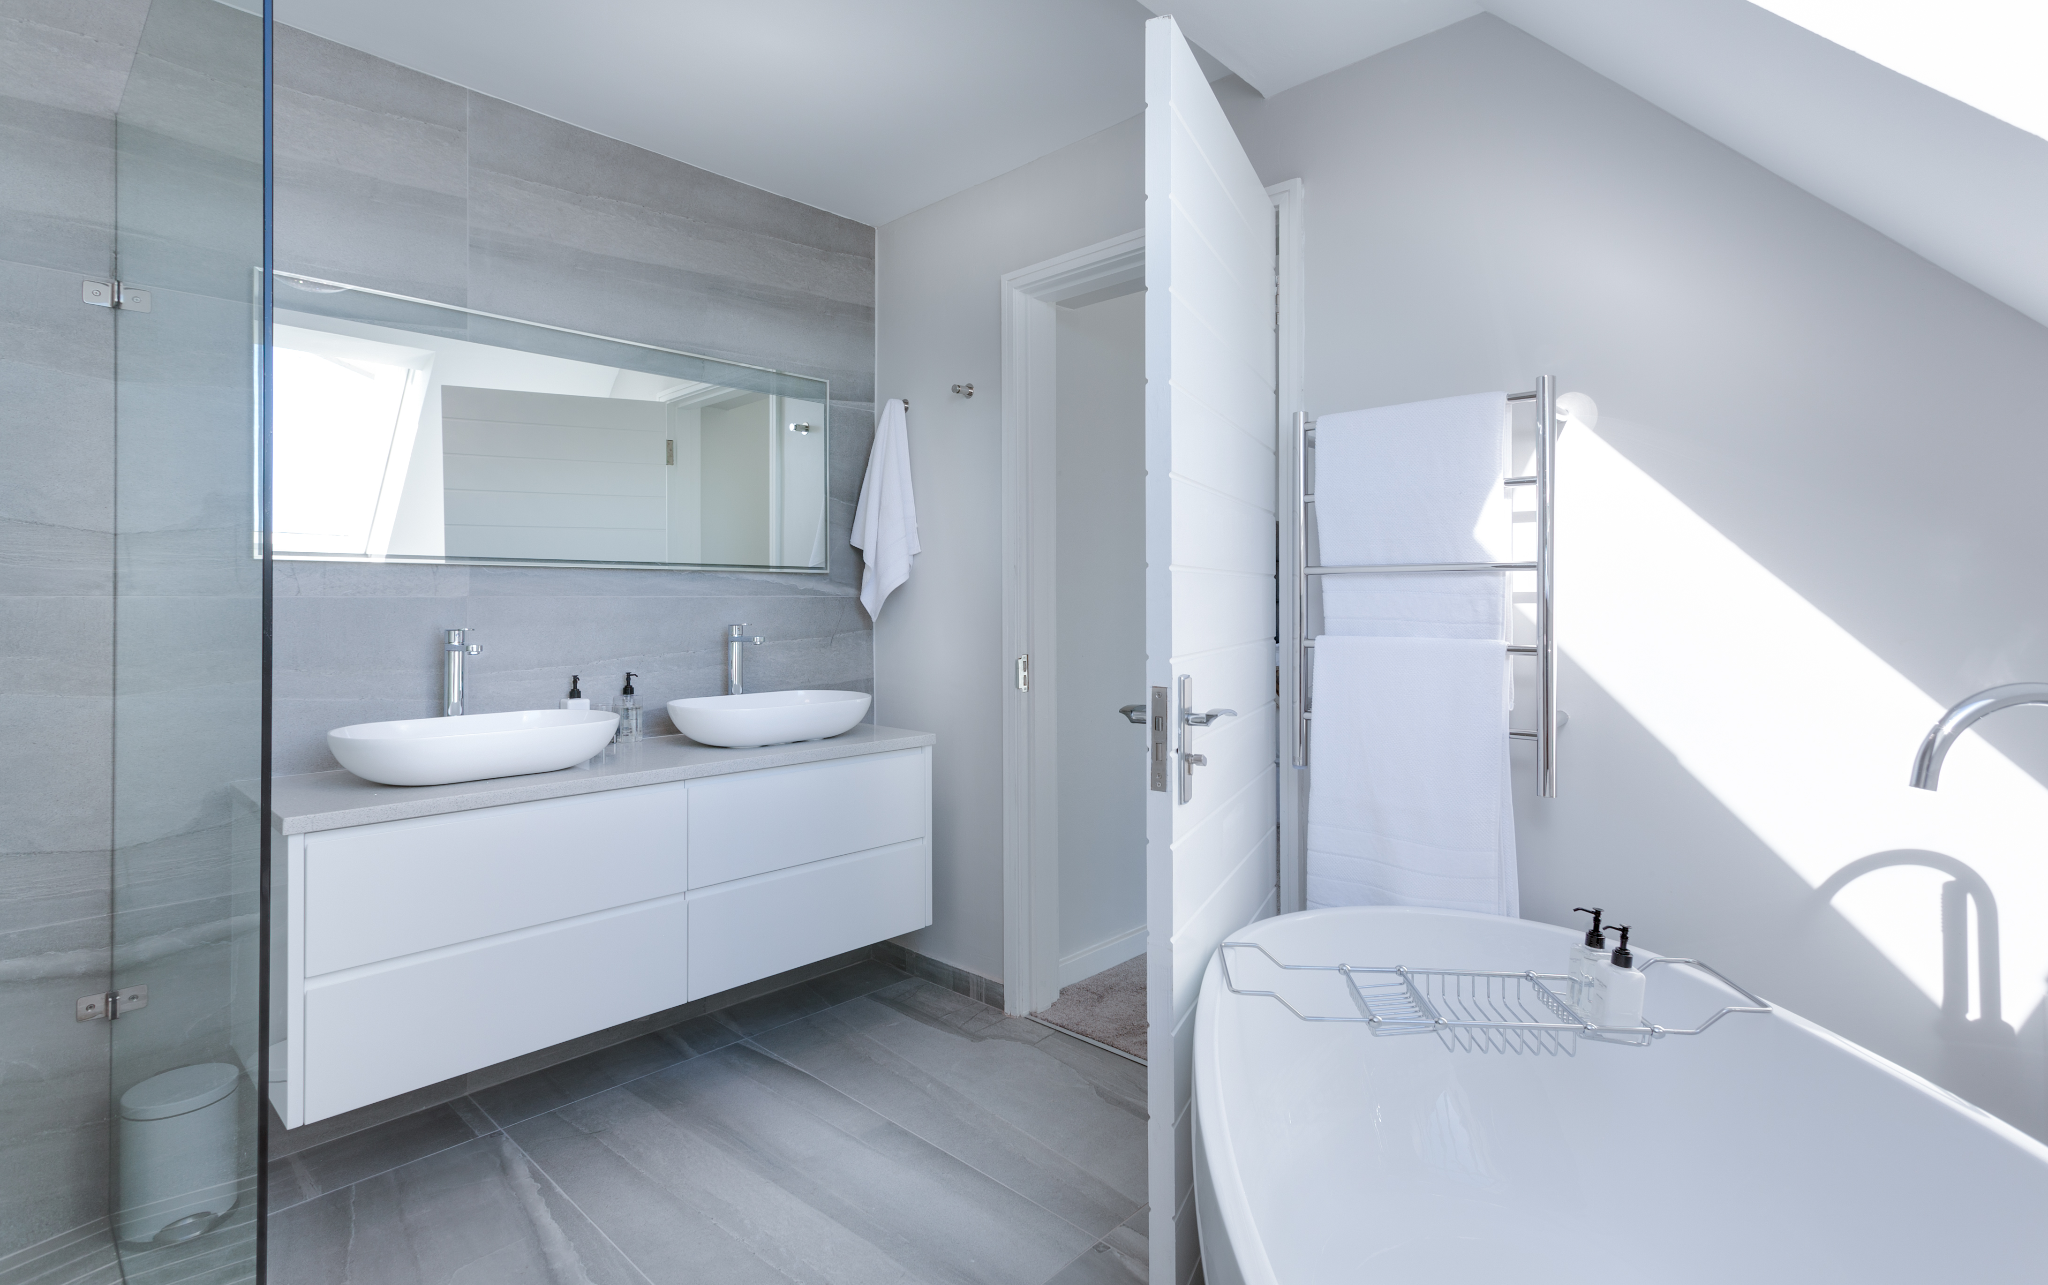 How do reglazing and bathroom renovations increase home resale value?